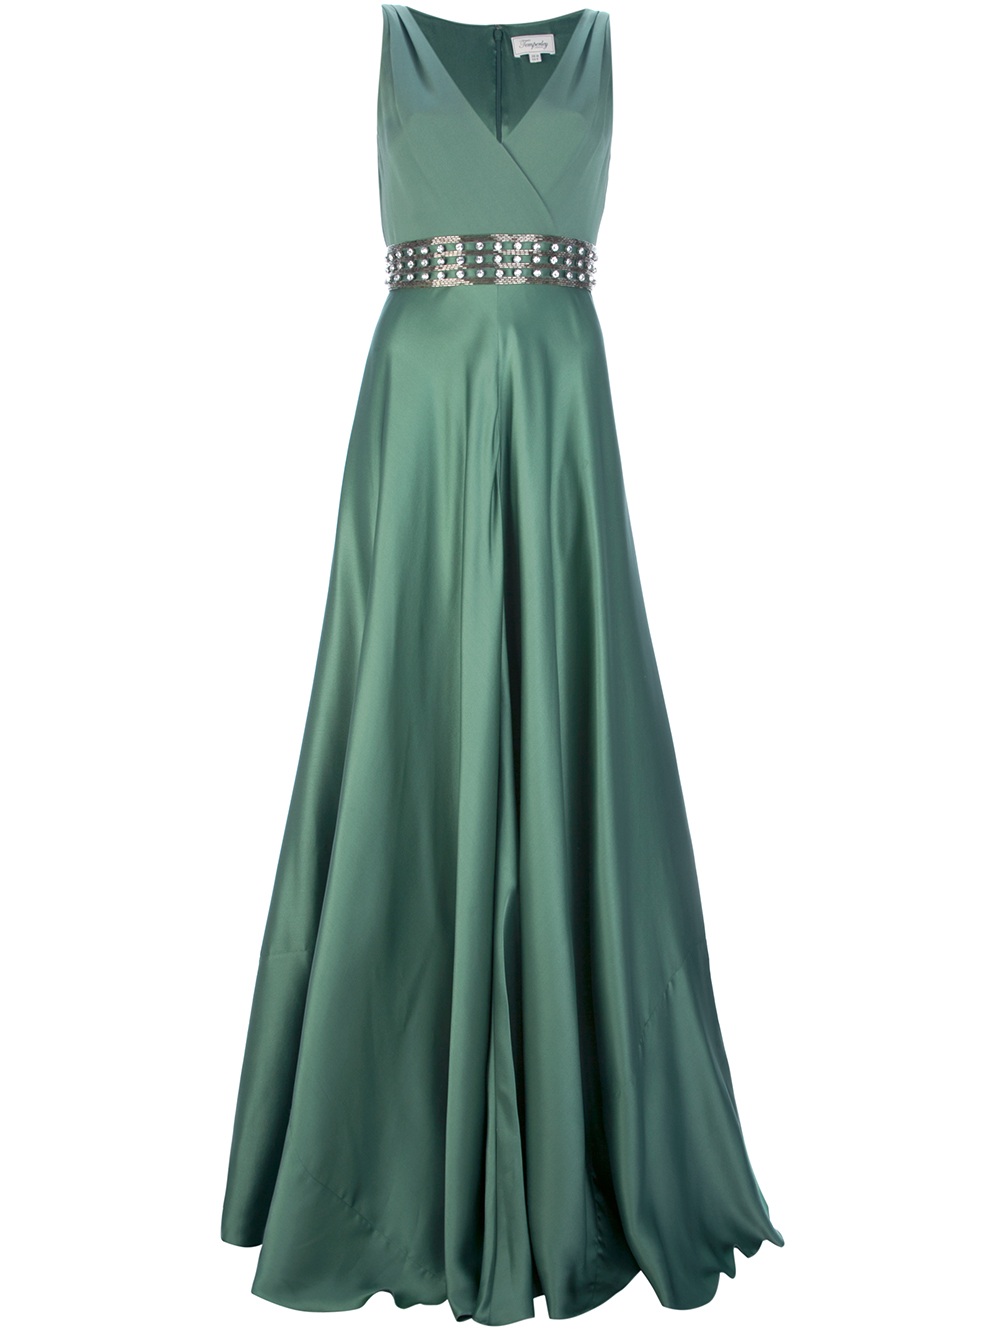 Lyst - Temperley London Stella Evening Dress in Green